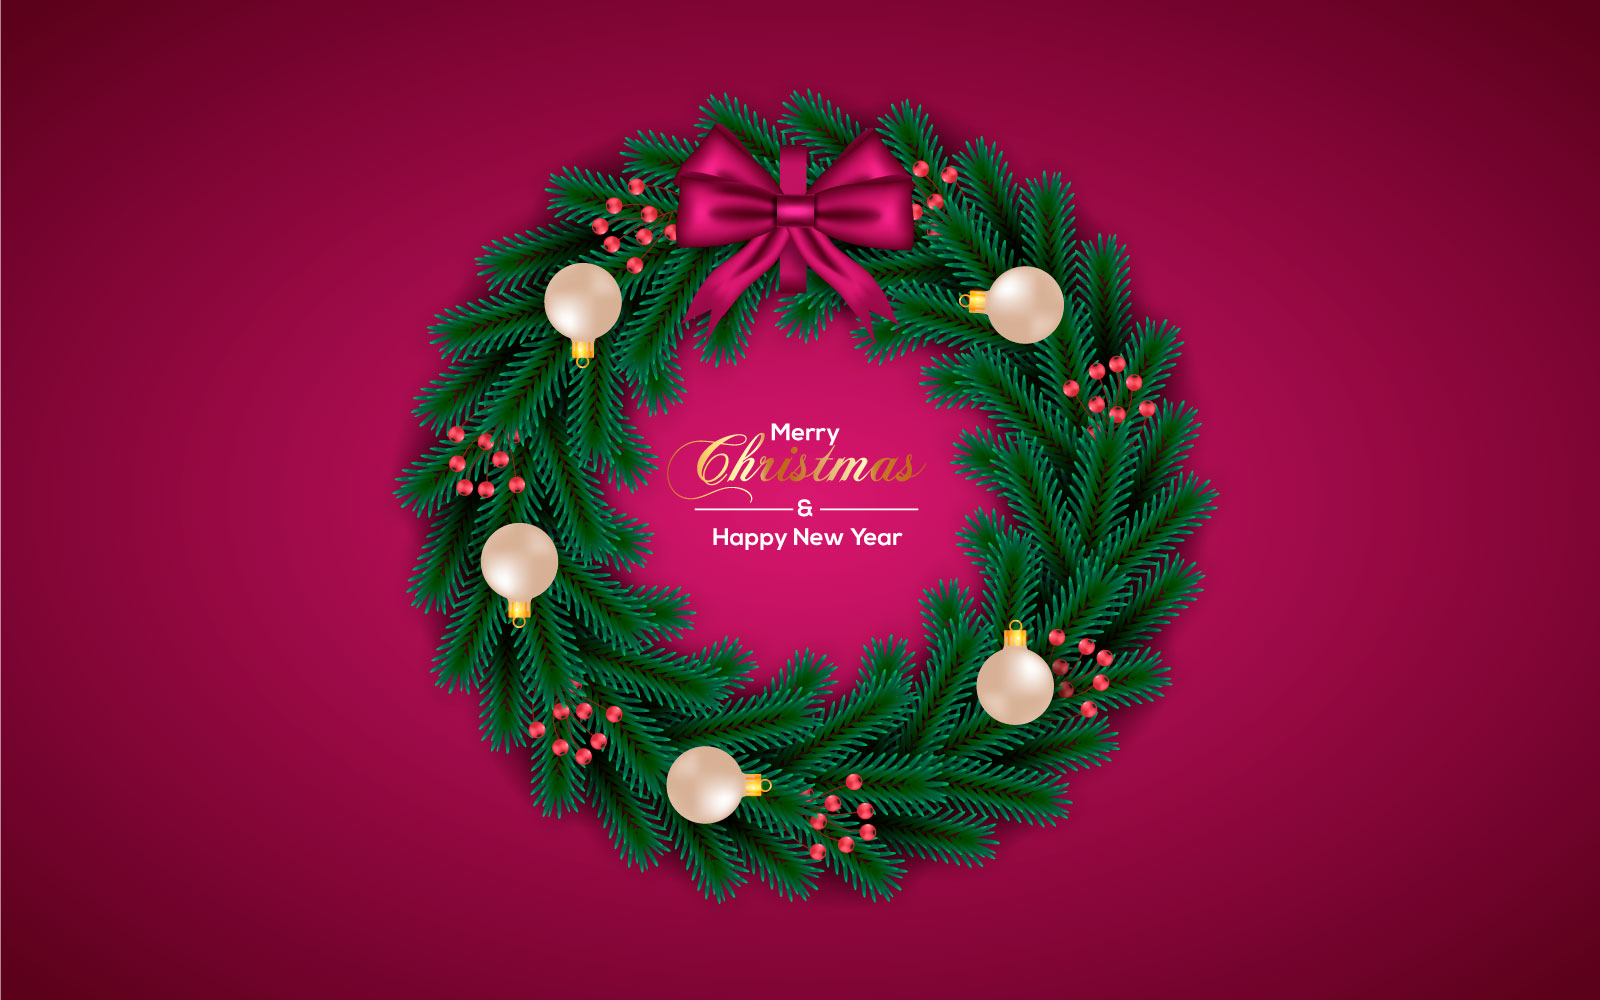 Christmas wreath vector design merry christmas text with christmas ball and star